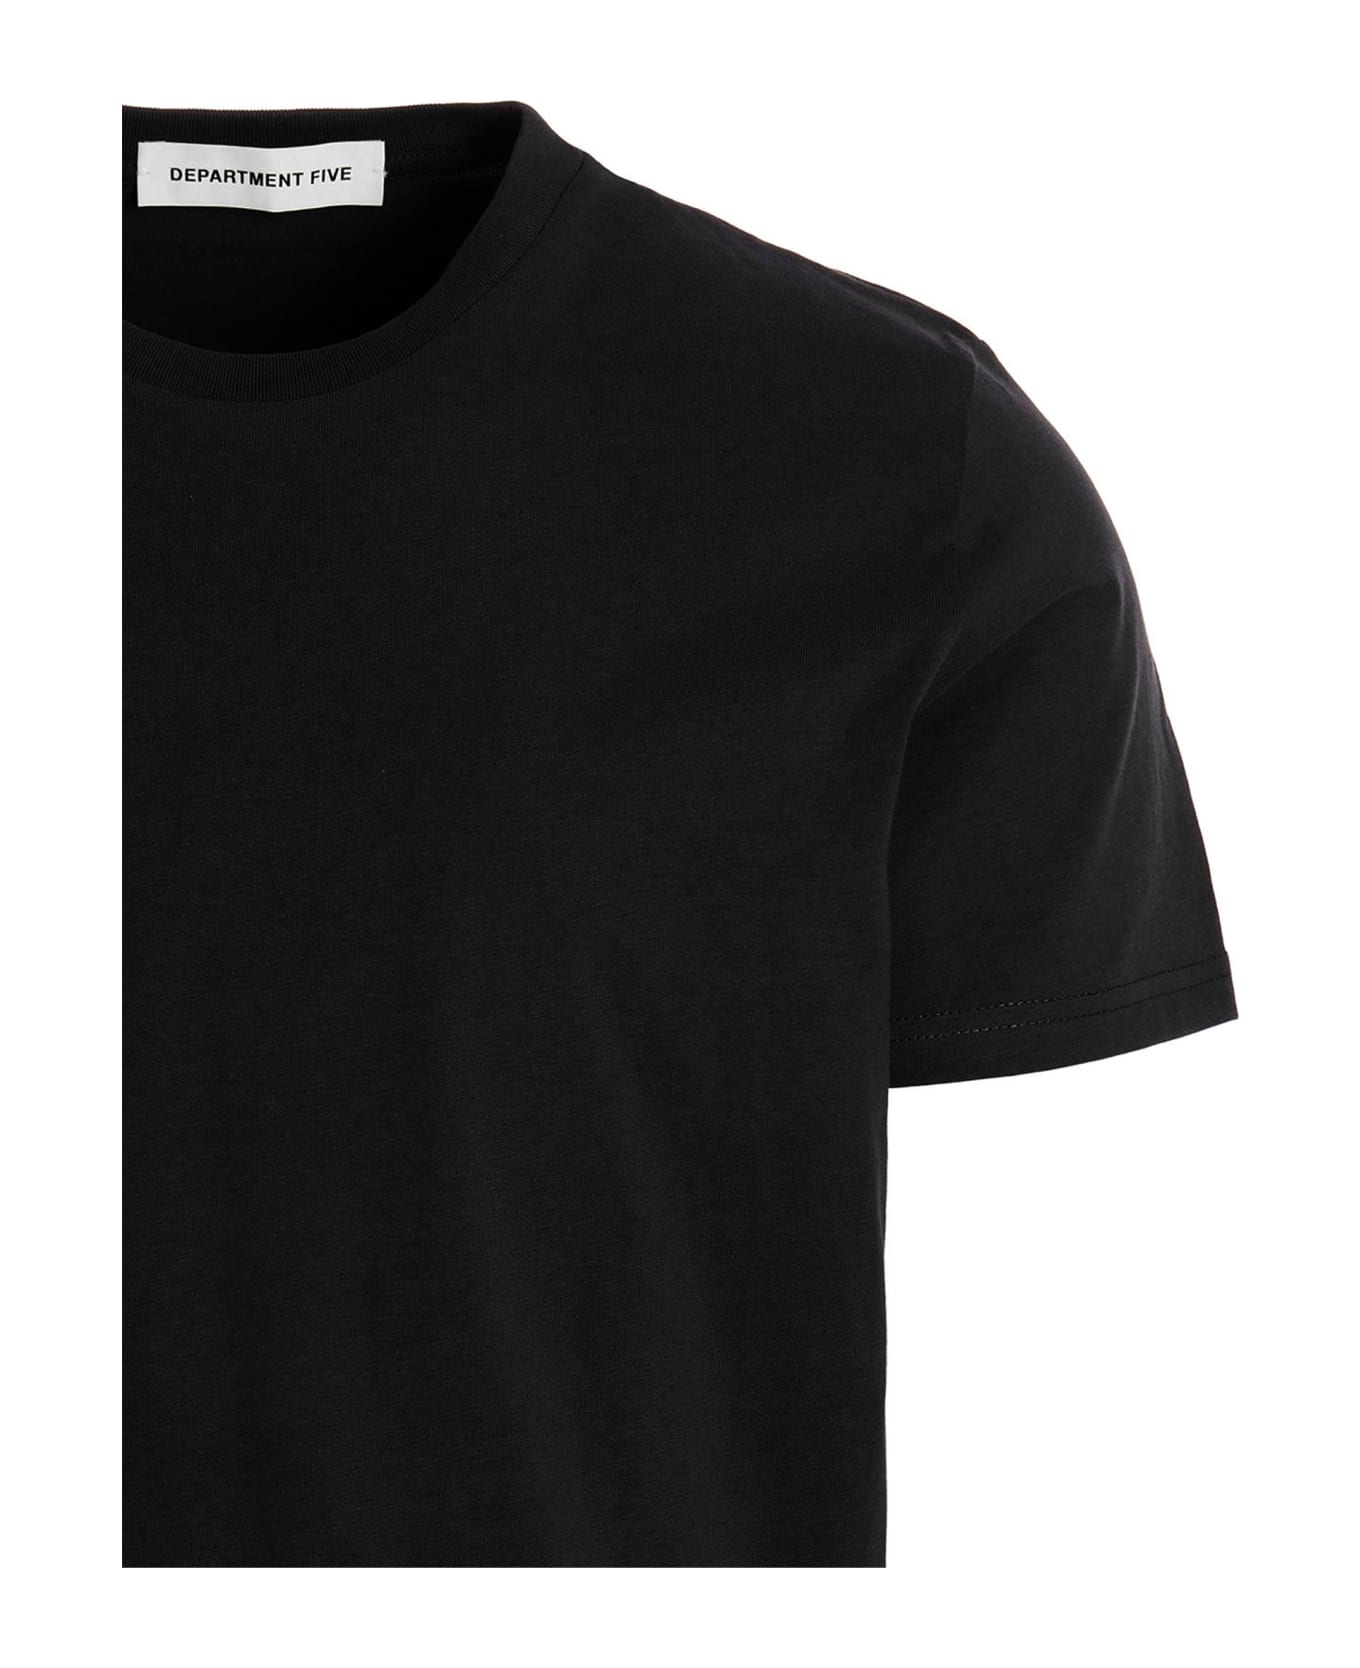 Department Five 'cesar' T-shirt - Black  